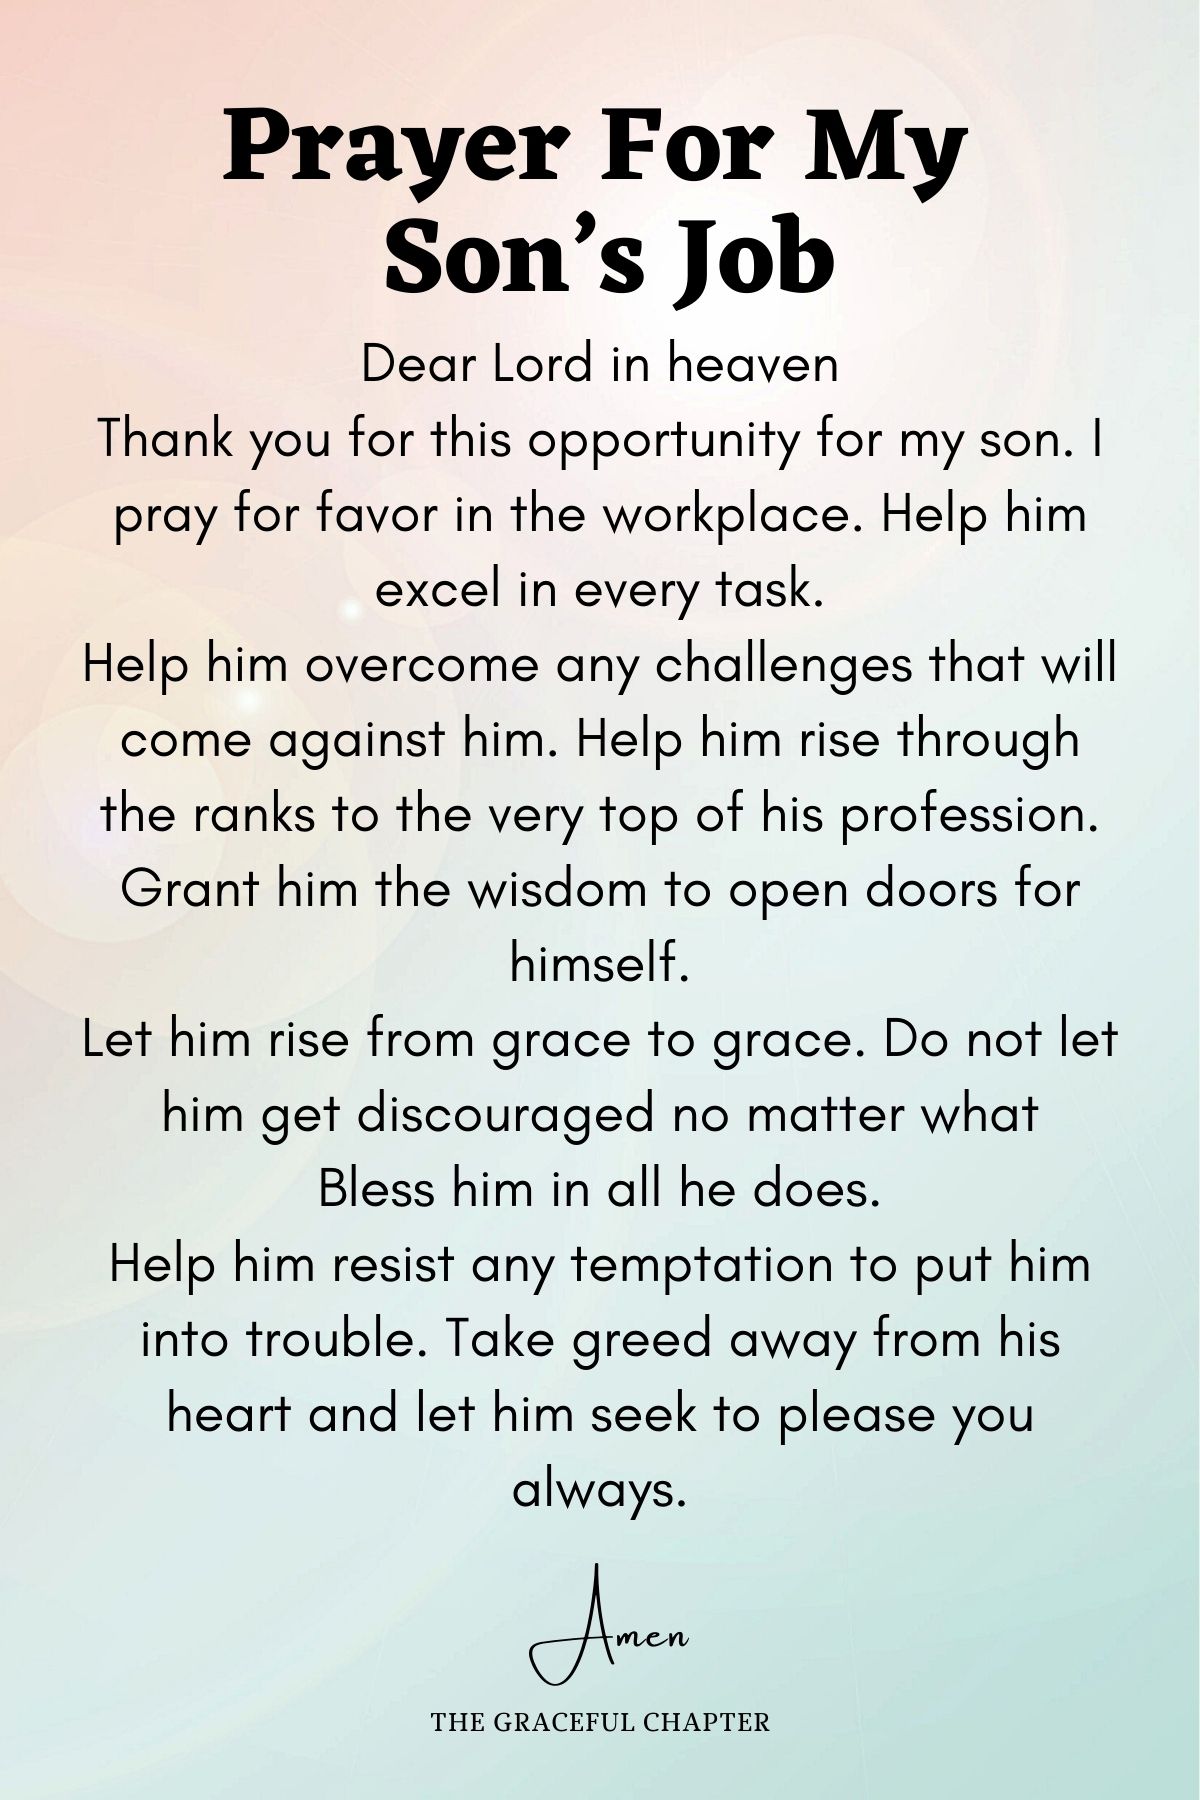 Prayer for my son’s job - prayers for my son